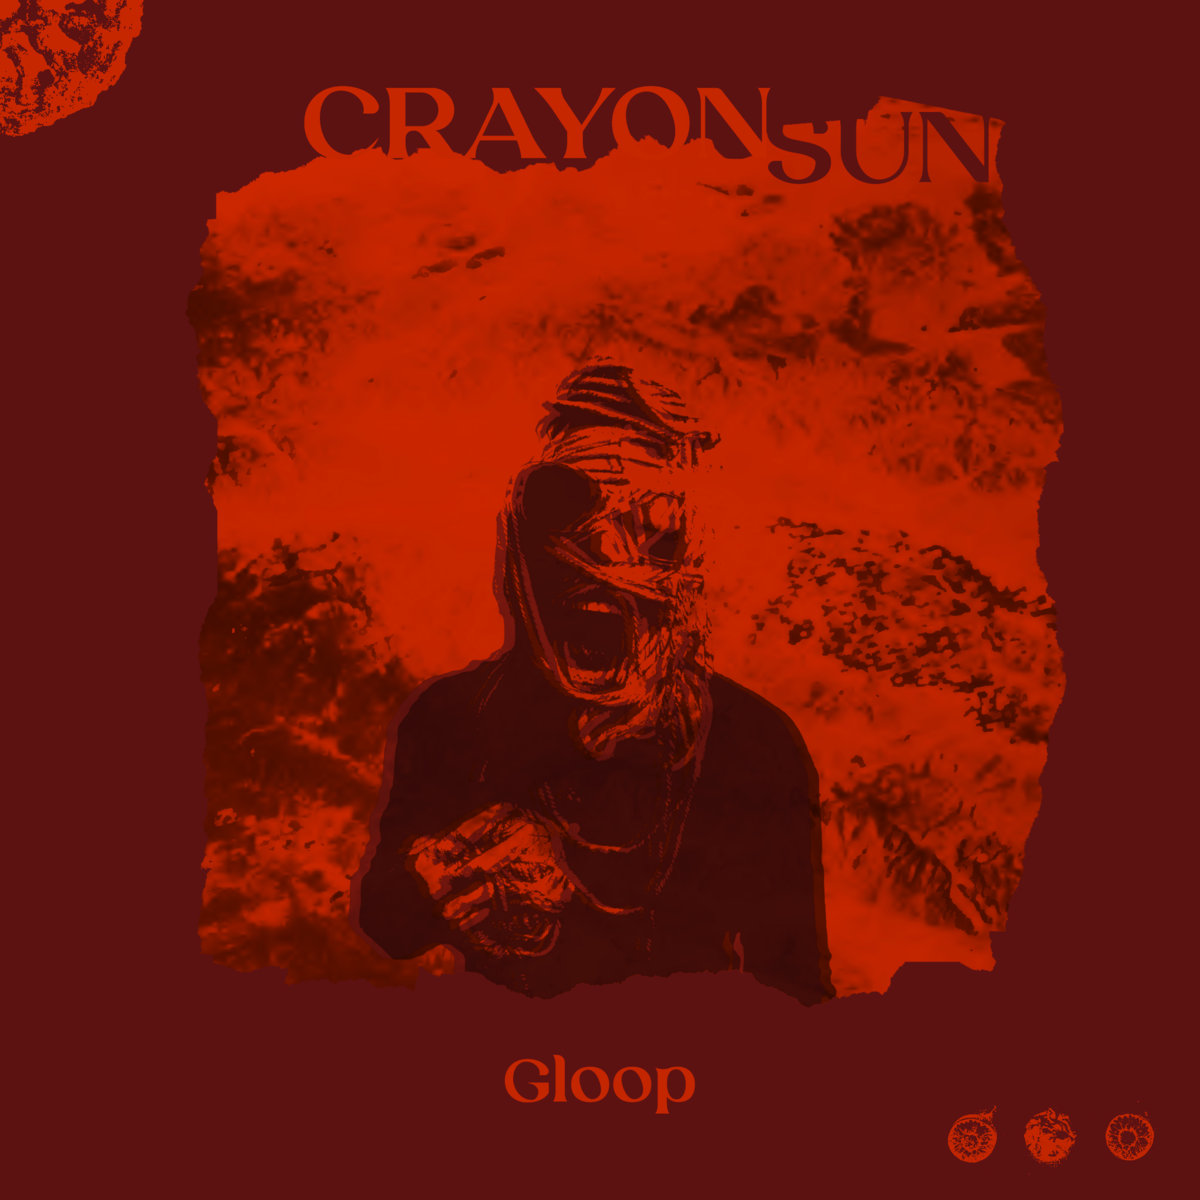 Gloop – Crayon Sun